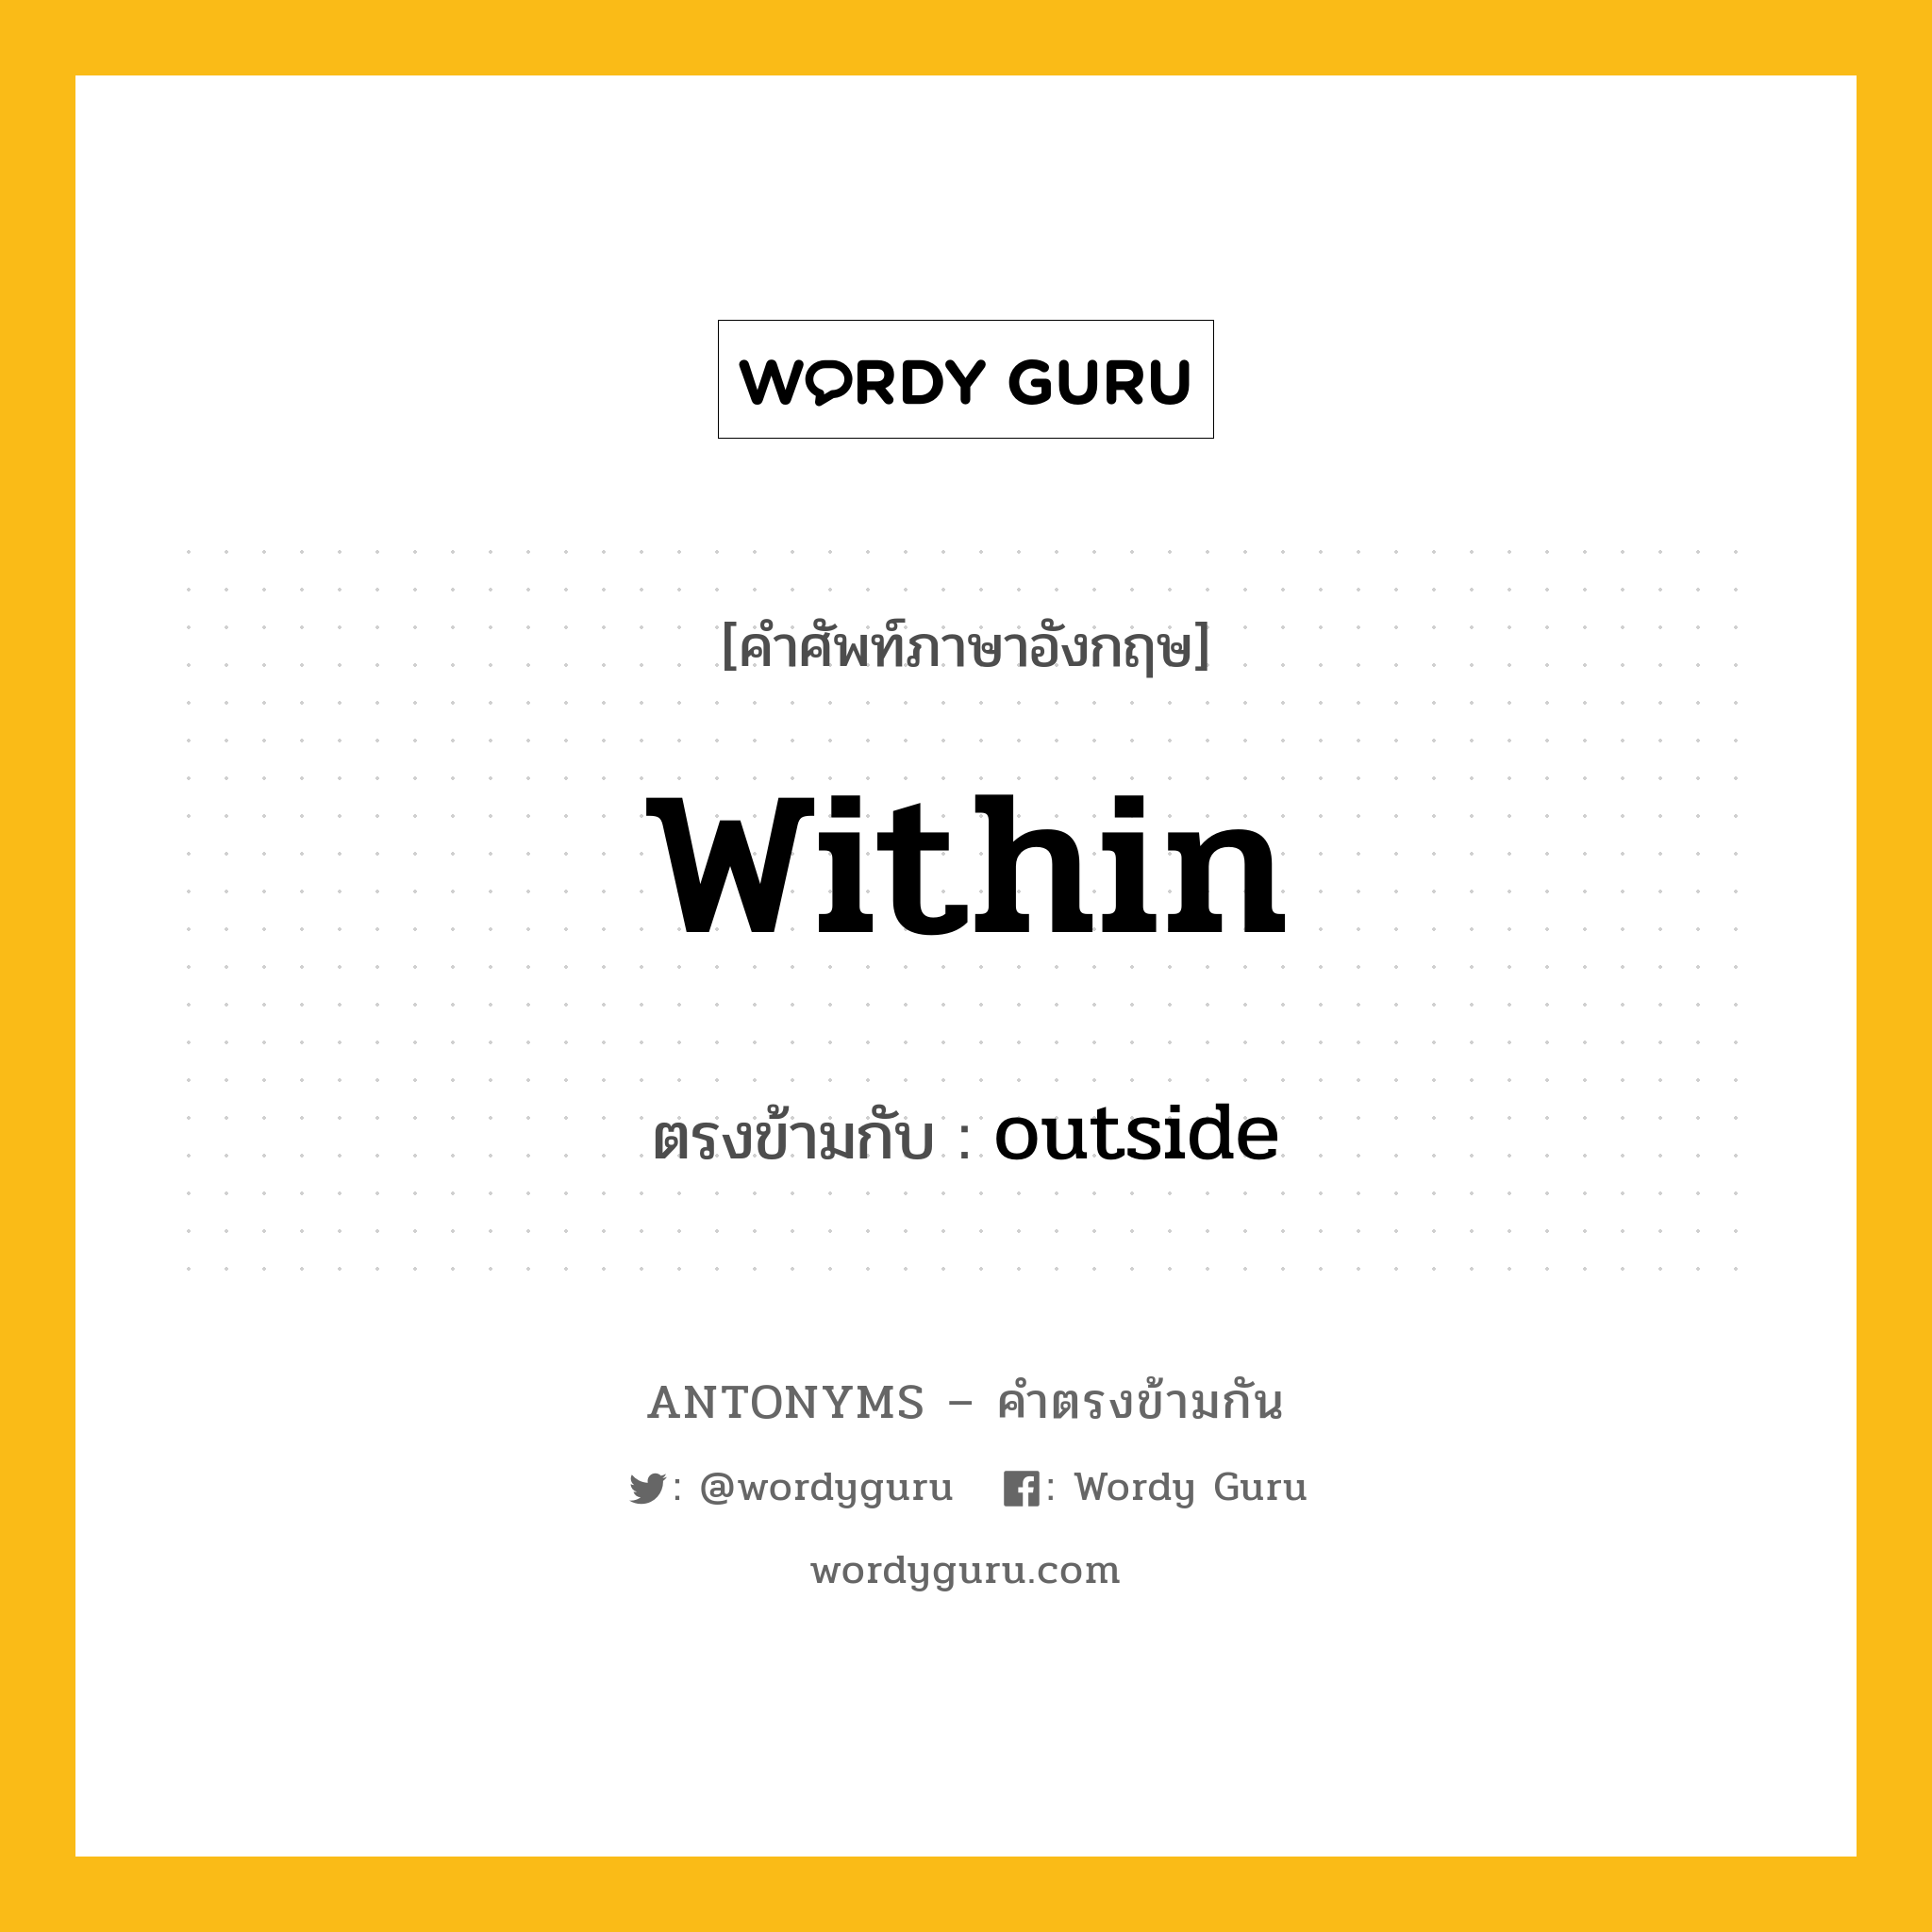 within เป็นคำตรงข้ามกับคำไหนบ้าง?, คำศัพท์ภาษาอังกฤษ within ตรงข้ามกับ outside หมวด outside